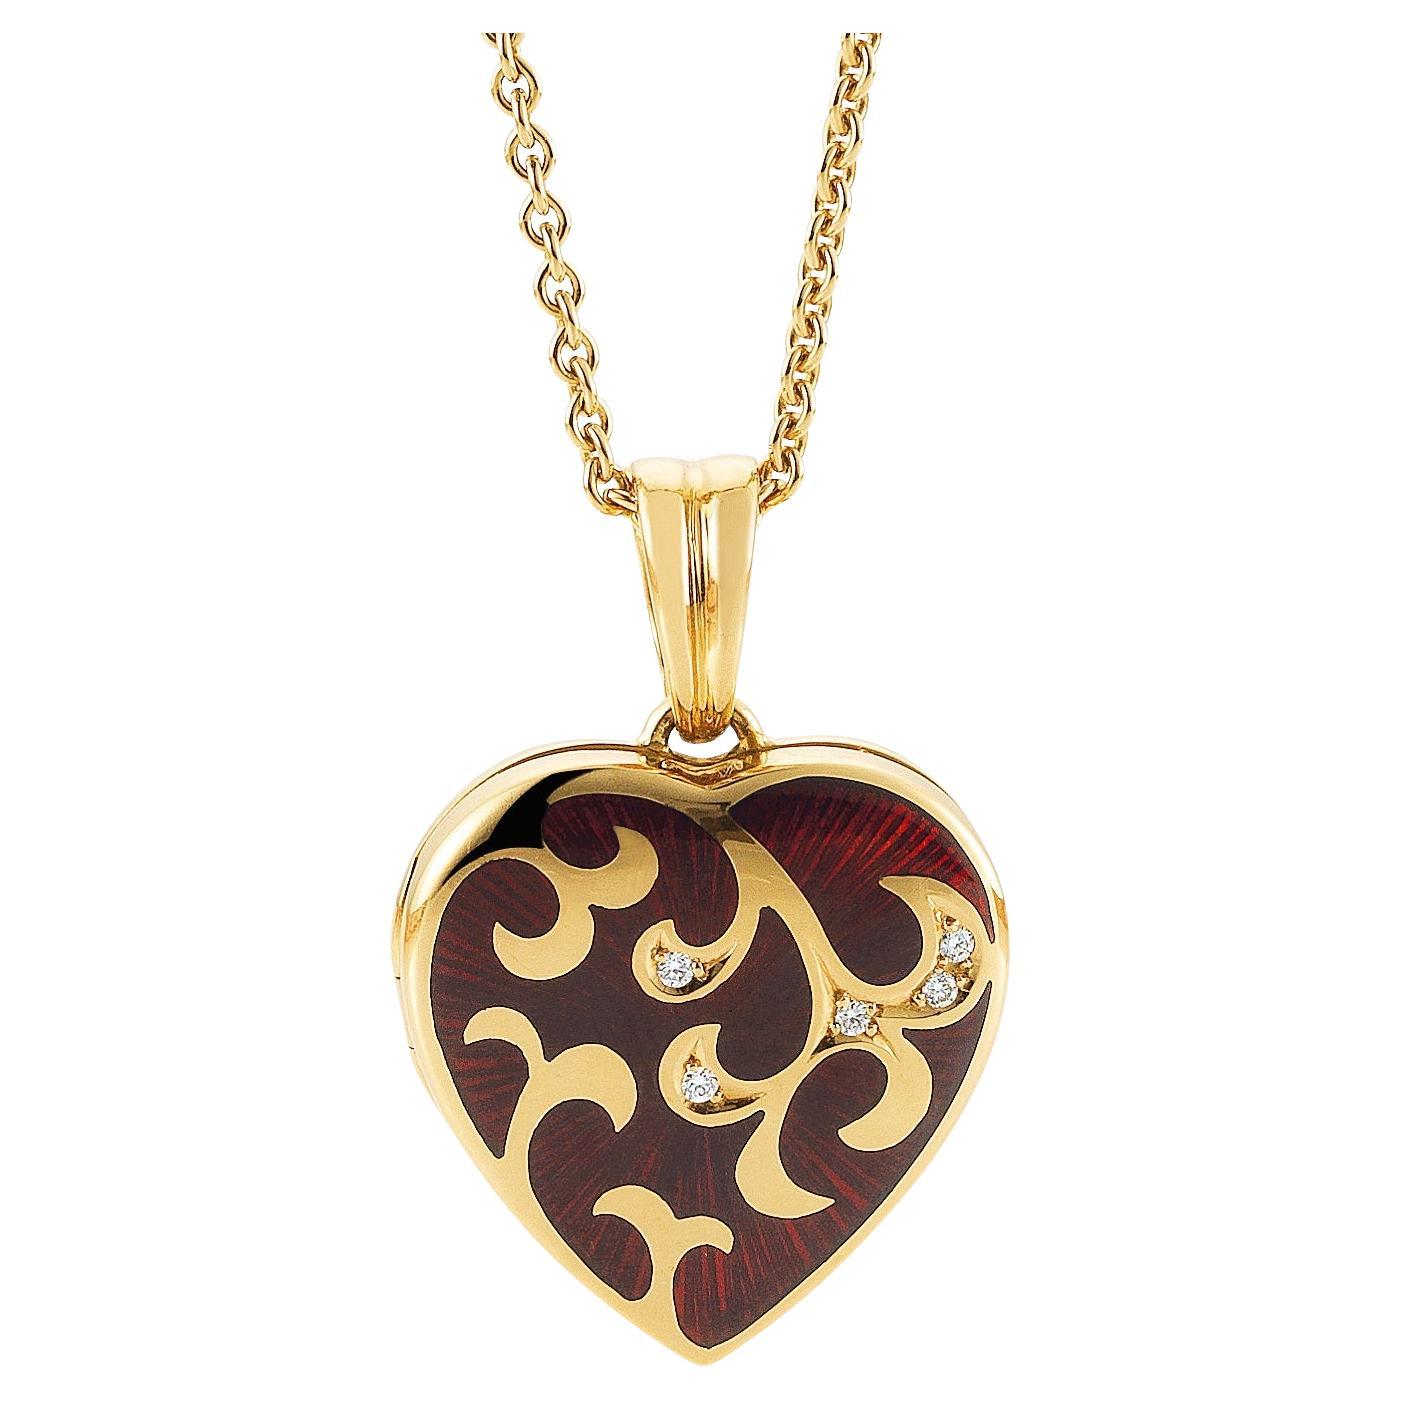 Heart Locket Pendant Necklace 18k Yellow Gold Red Enamel 5 Diamonds 0.05ct H VS